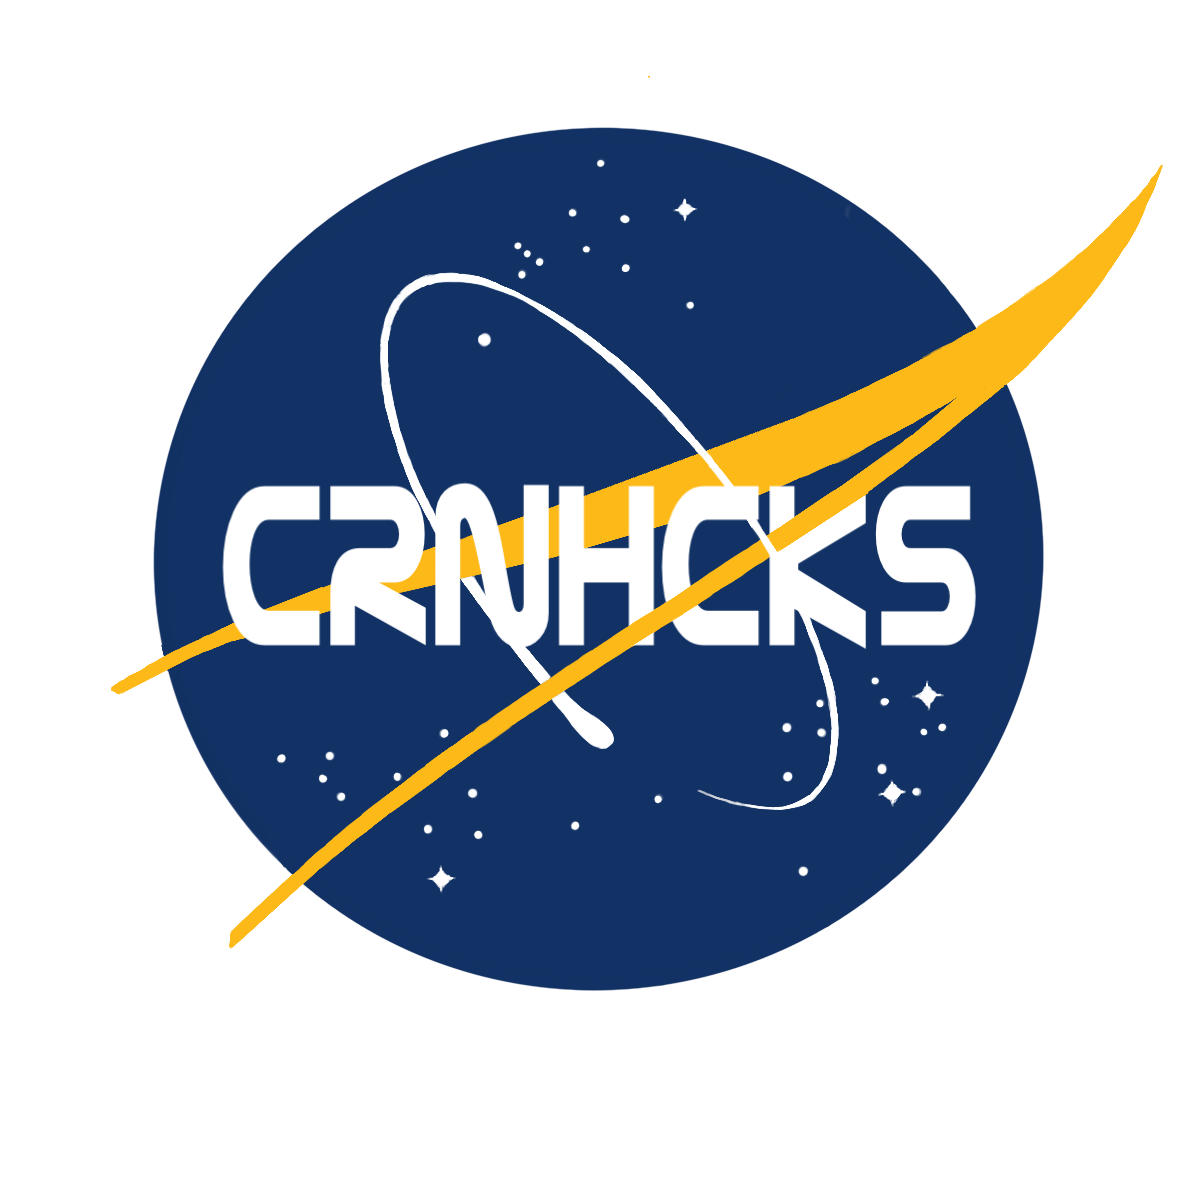 Cornhacks logo